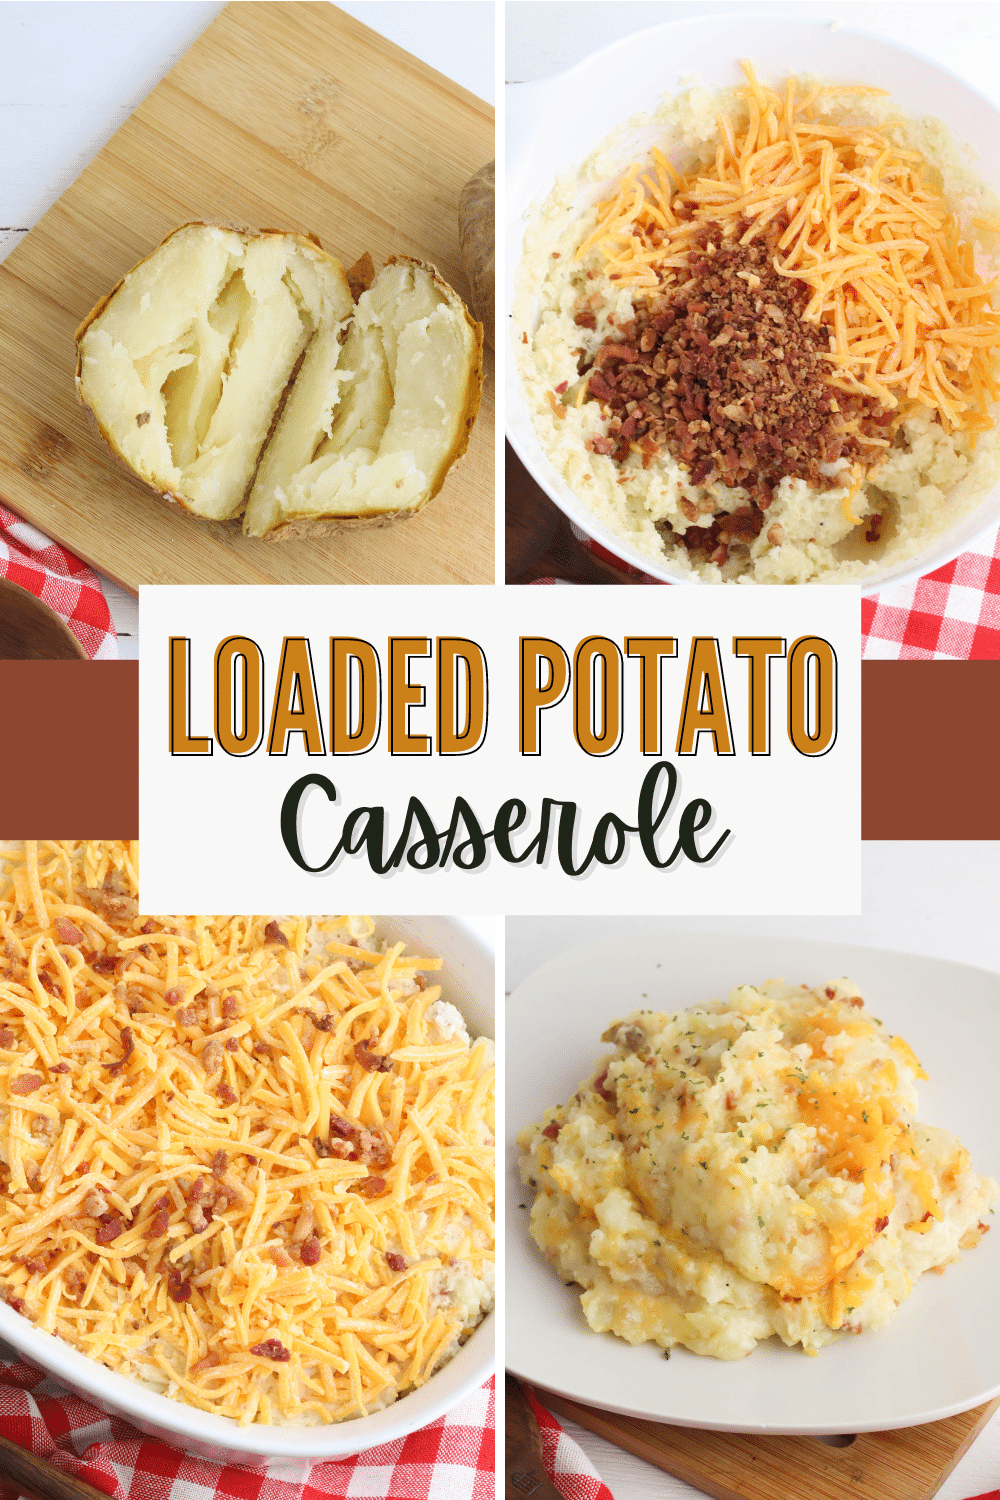 Images of loaded potato casserole.